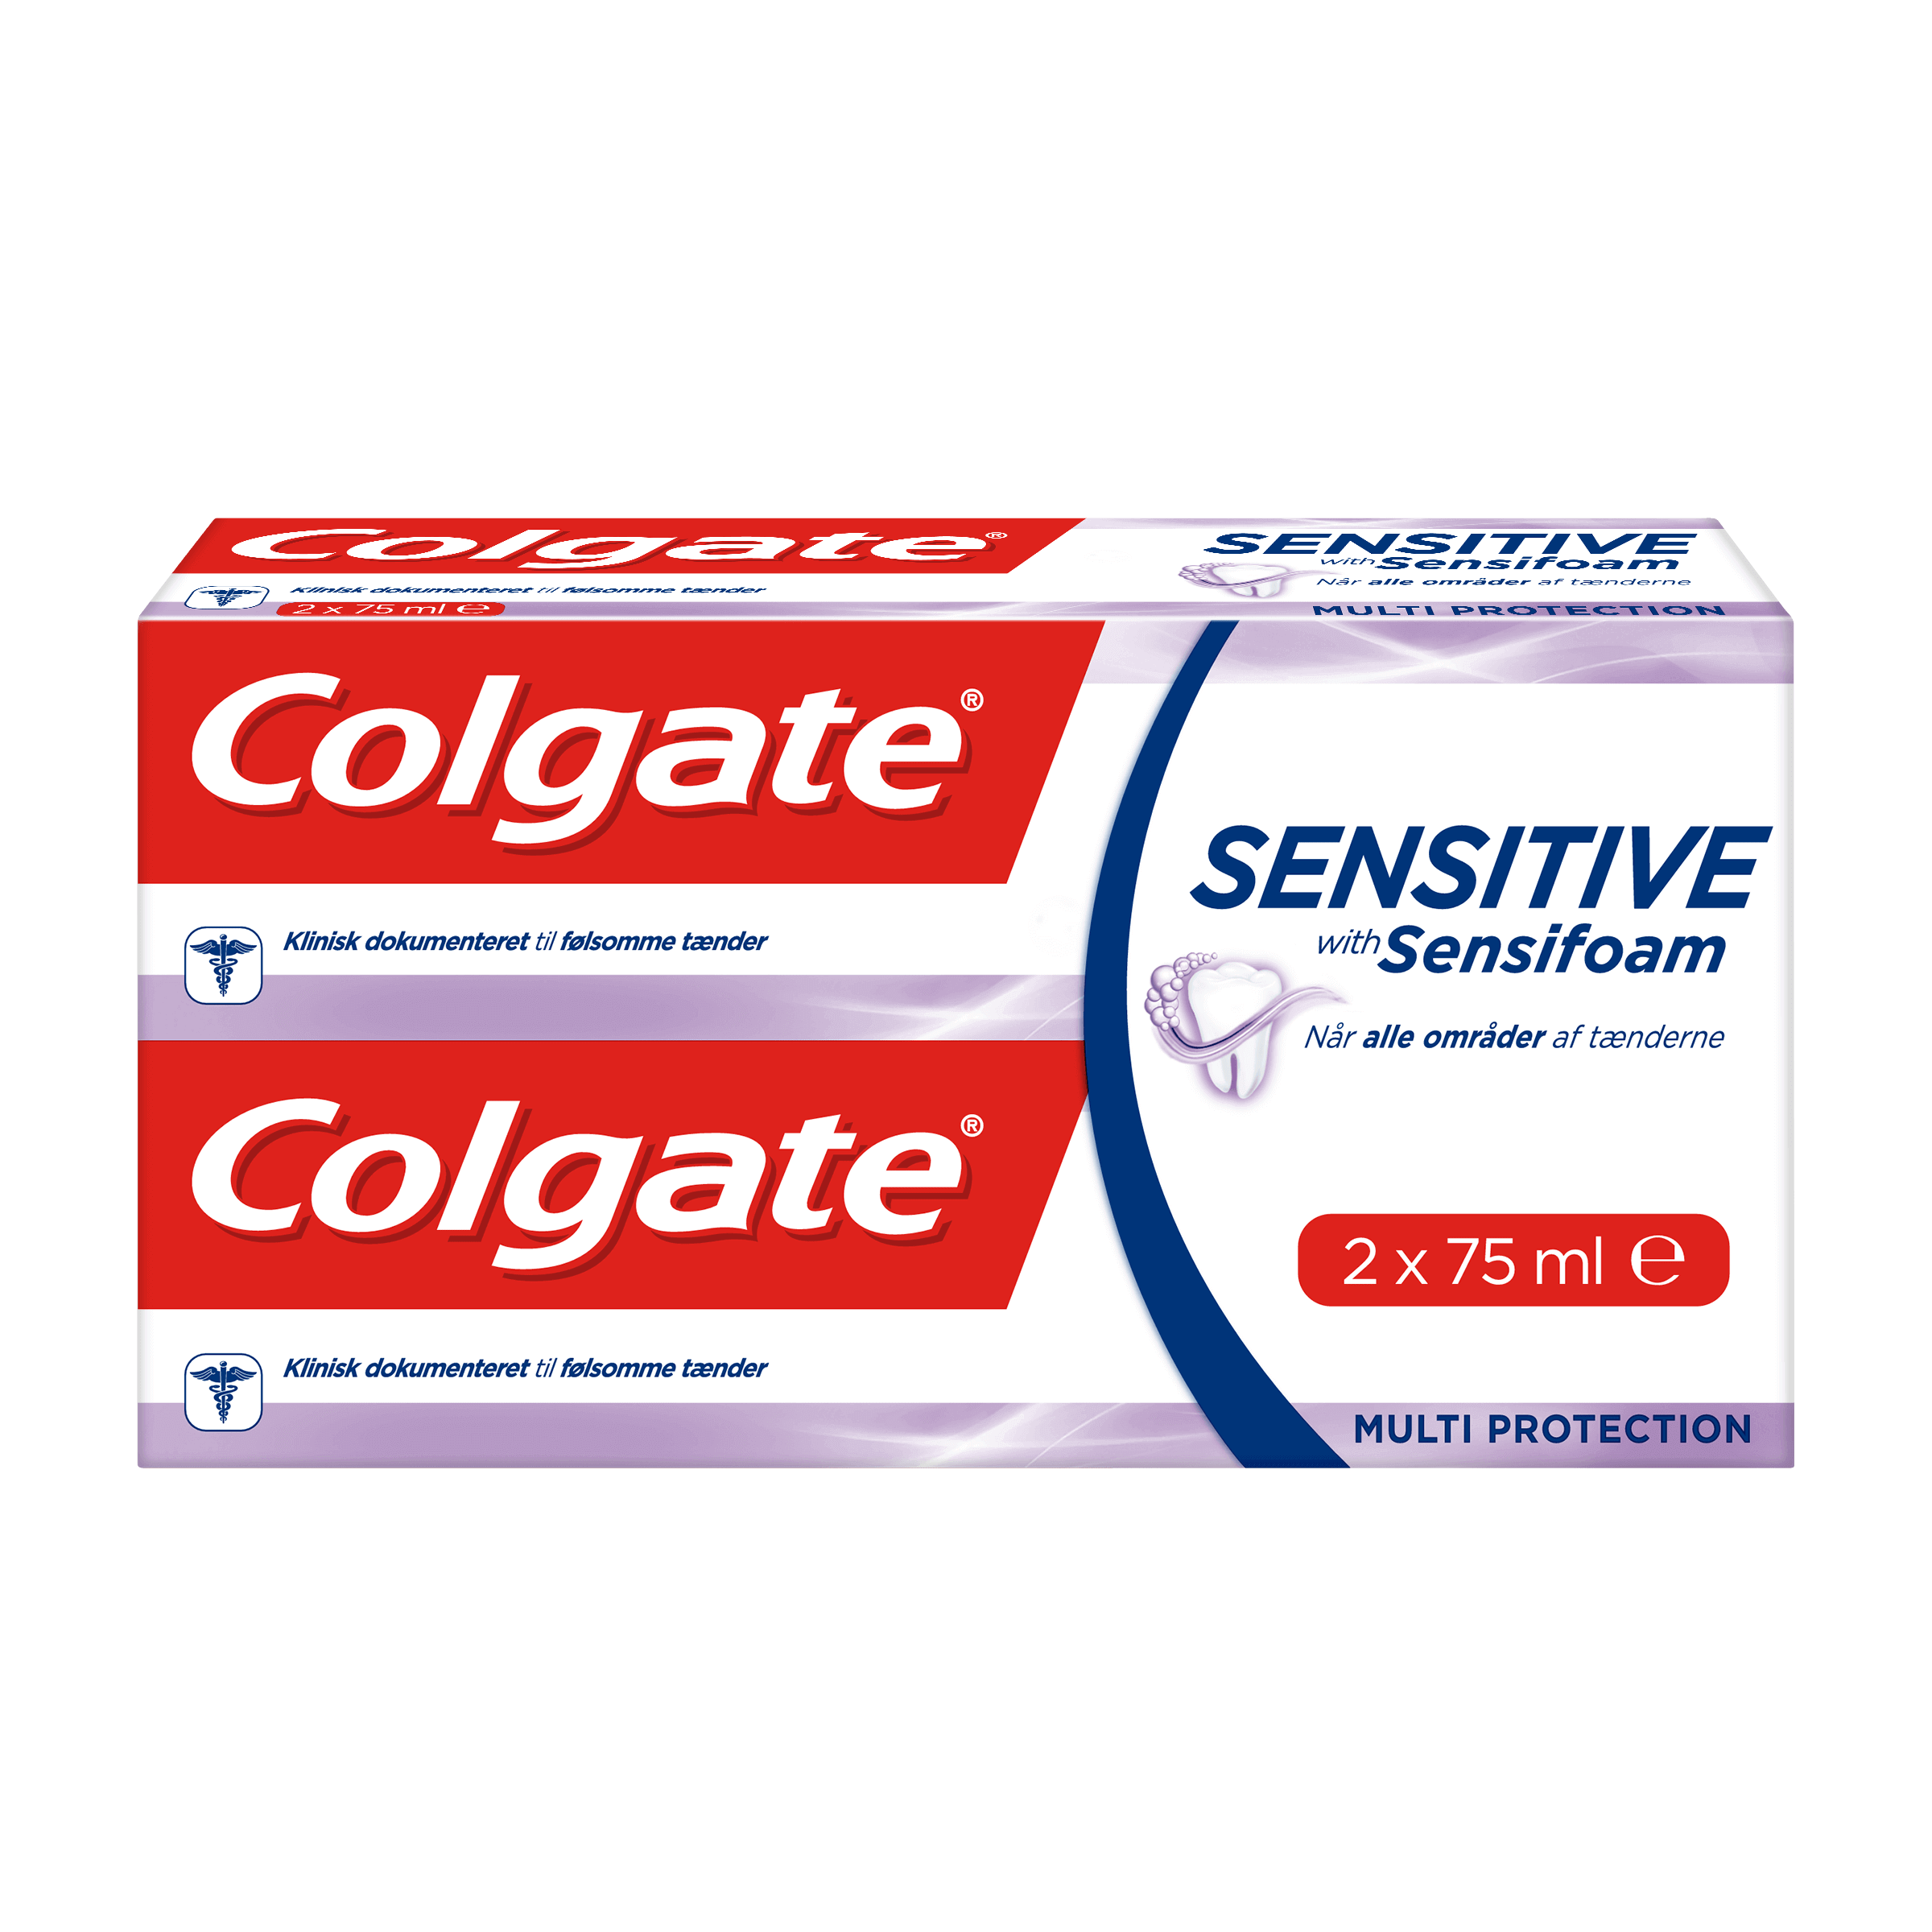 Colgate® Sensitive with Sensifoam